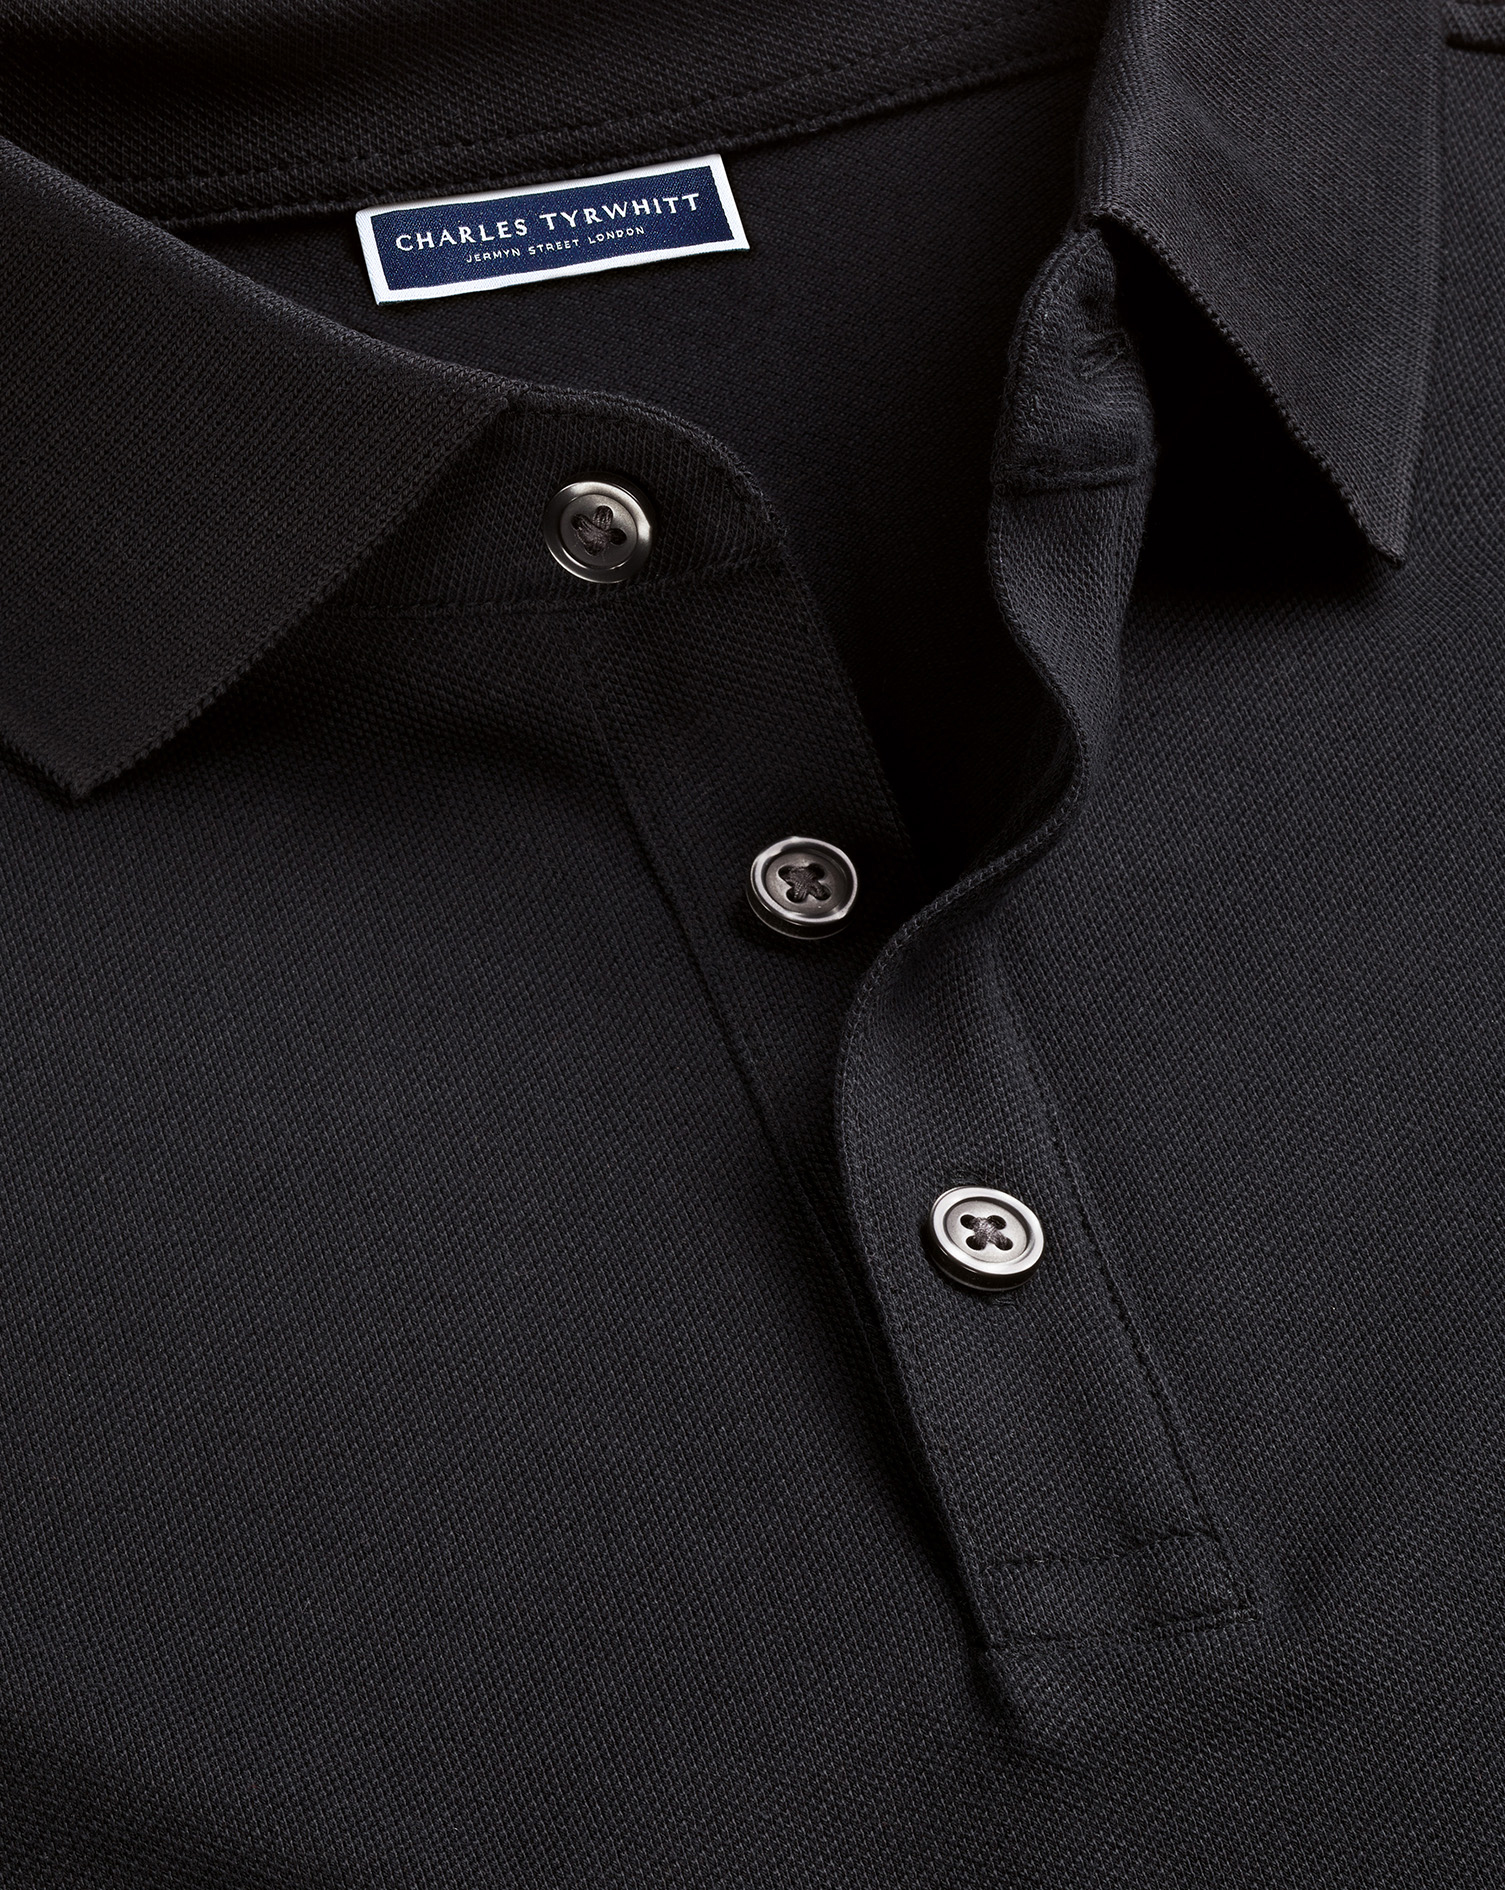 Men's Charles Tyrwhitt Pique Polo Shirt - Black Size Small Cotton
